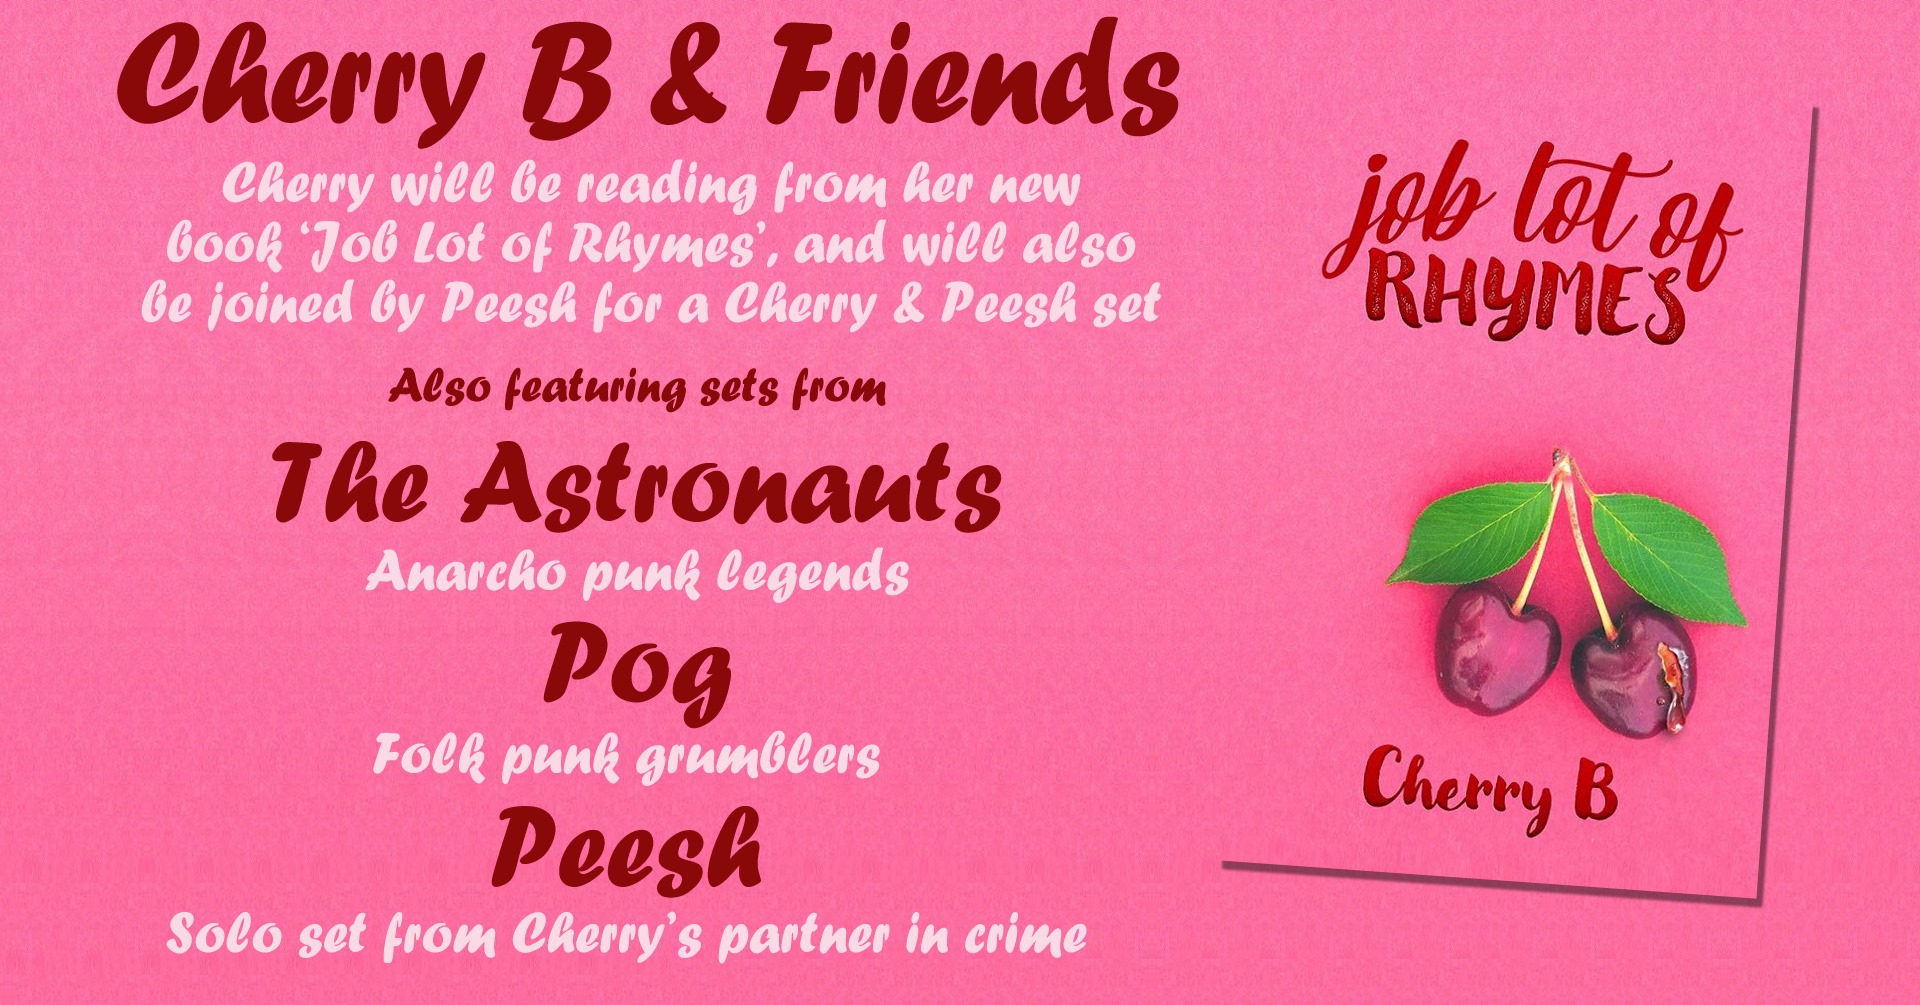 Cherry B & Friends / The Astronauts / Pog / Peesh